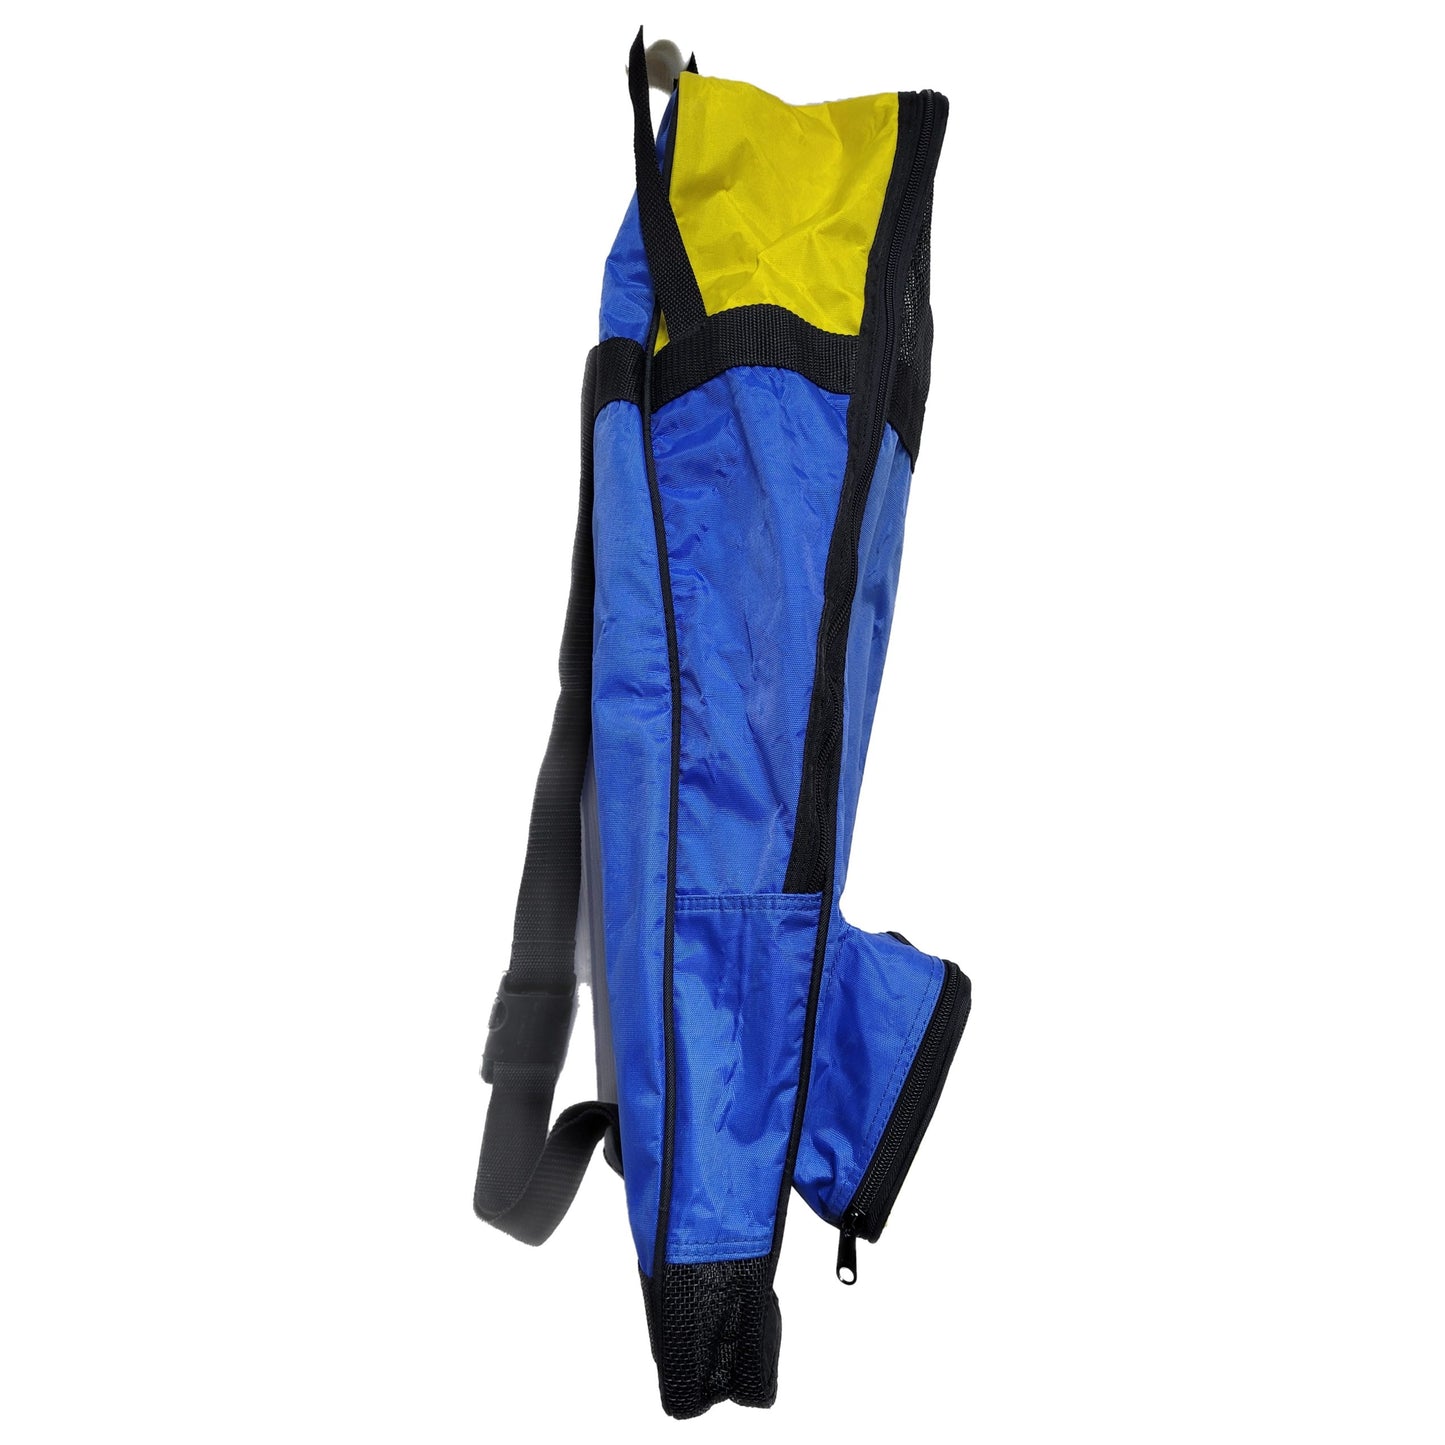 Snorkel Pro Carry Bag for Snorkeling Gear